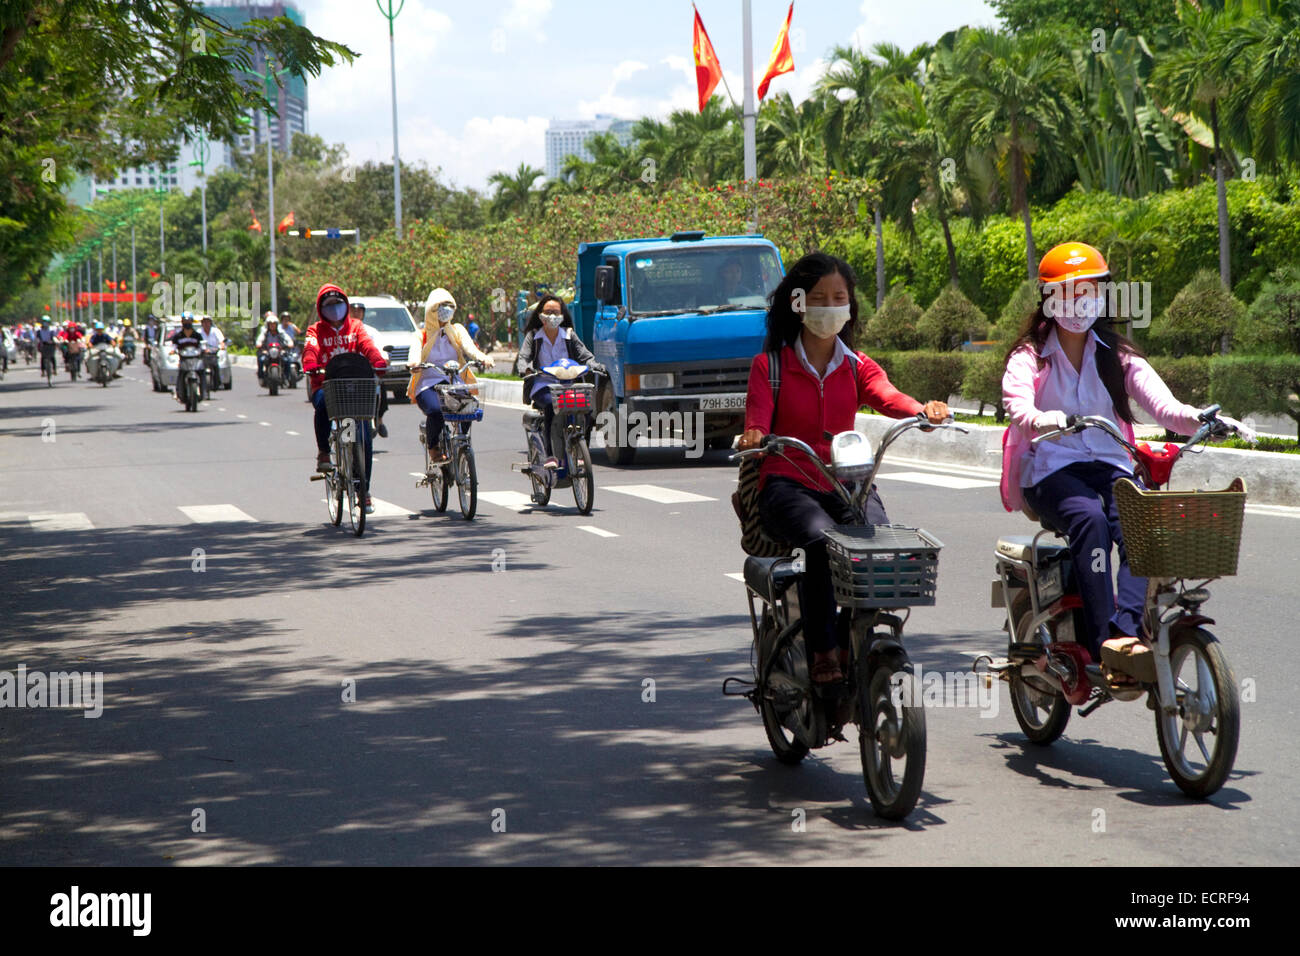 Trafic scooter dans une rue de Nha Trang, Vietnam. Banque D'Images